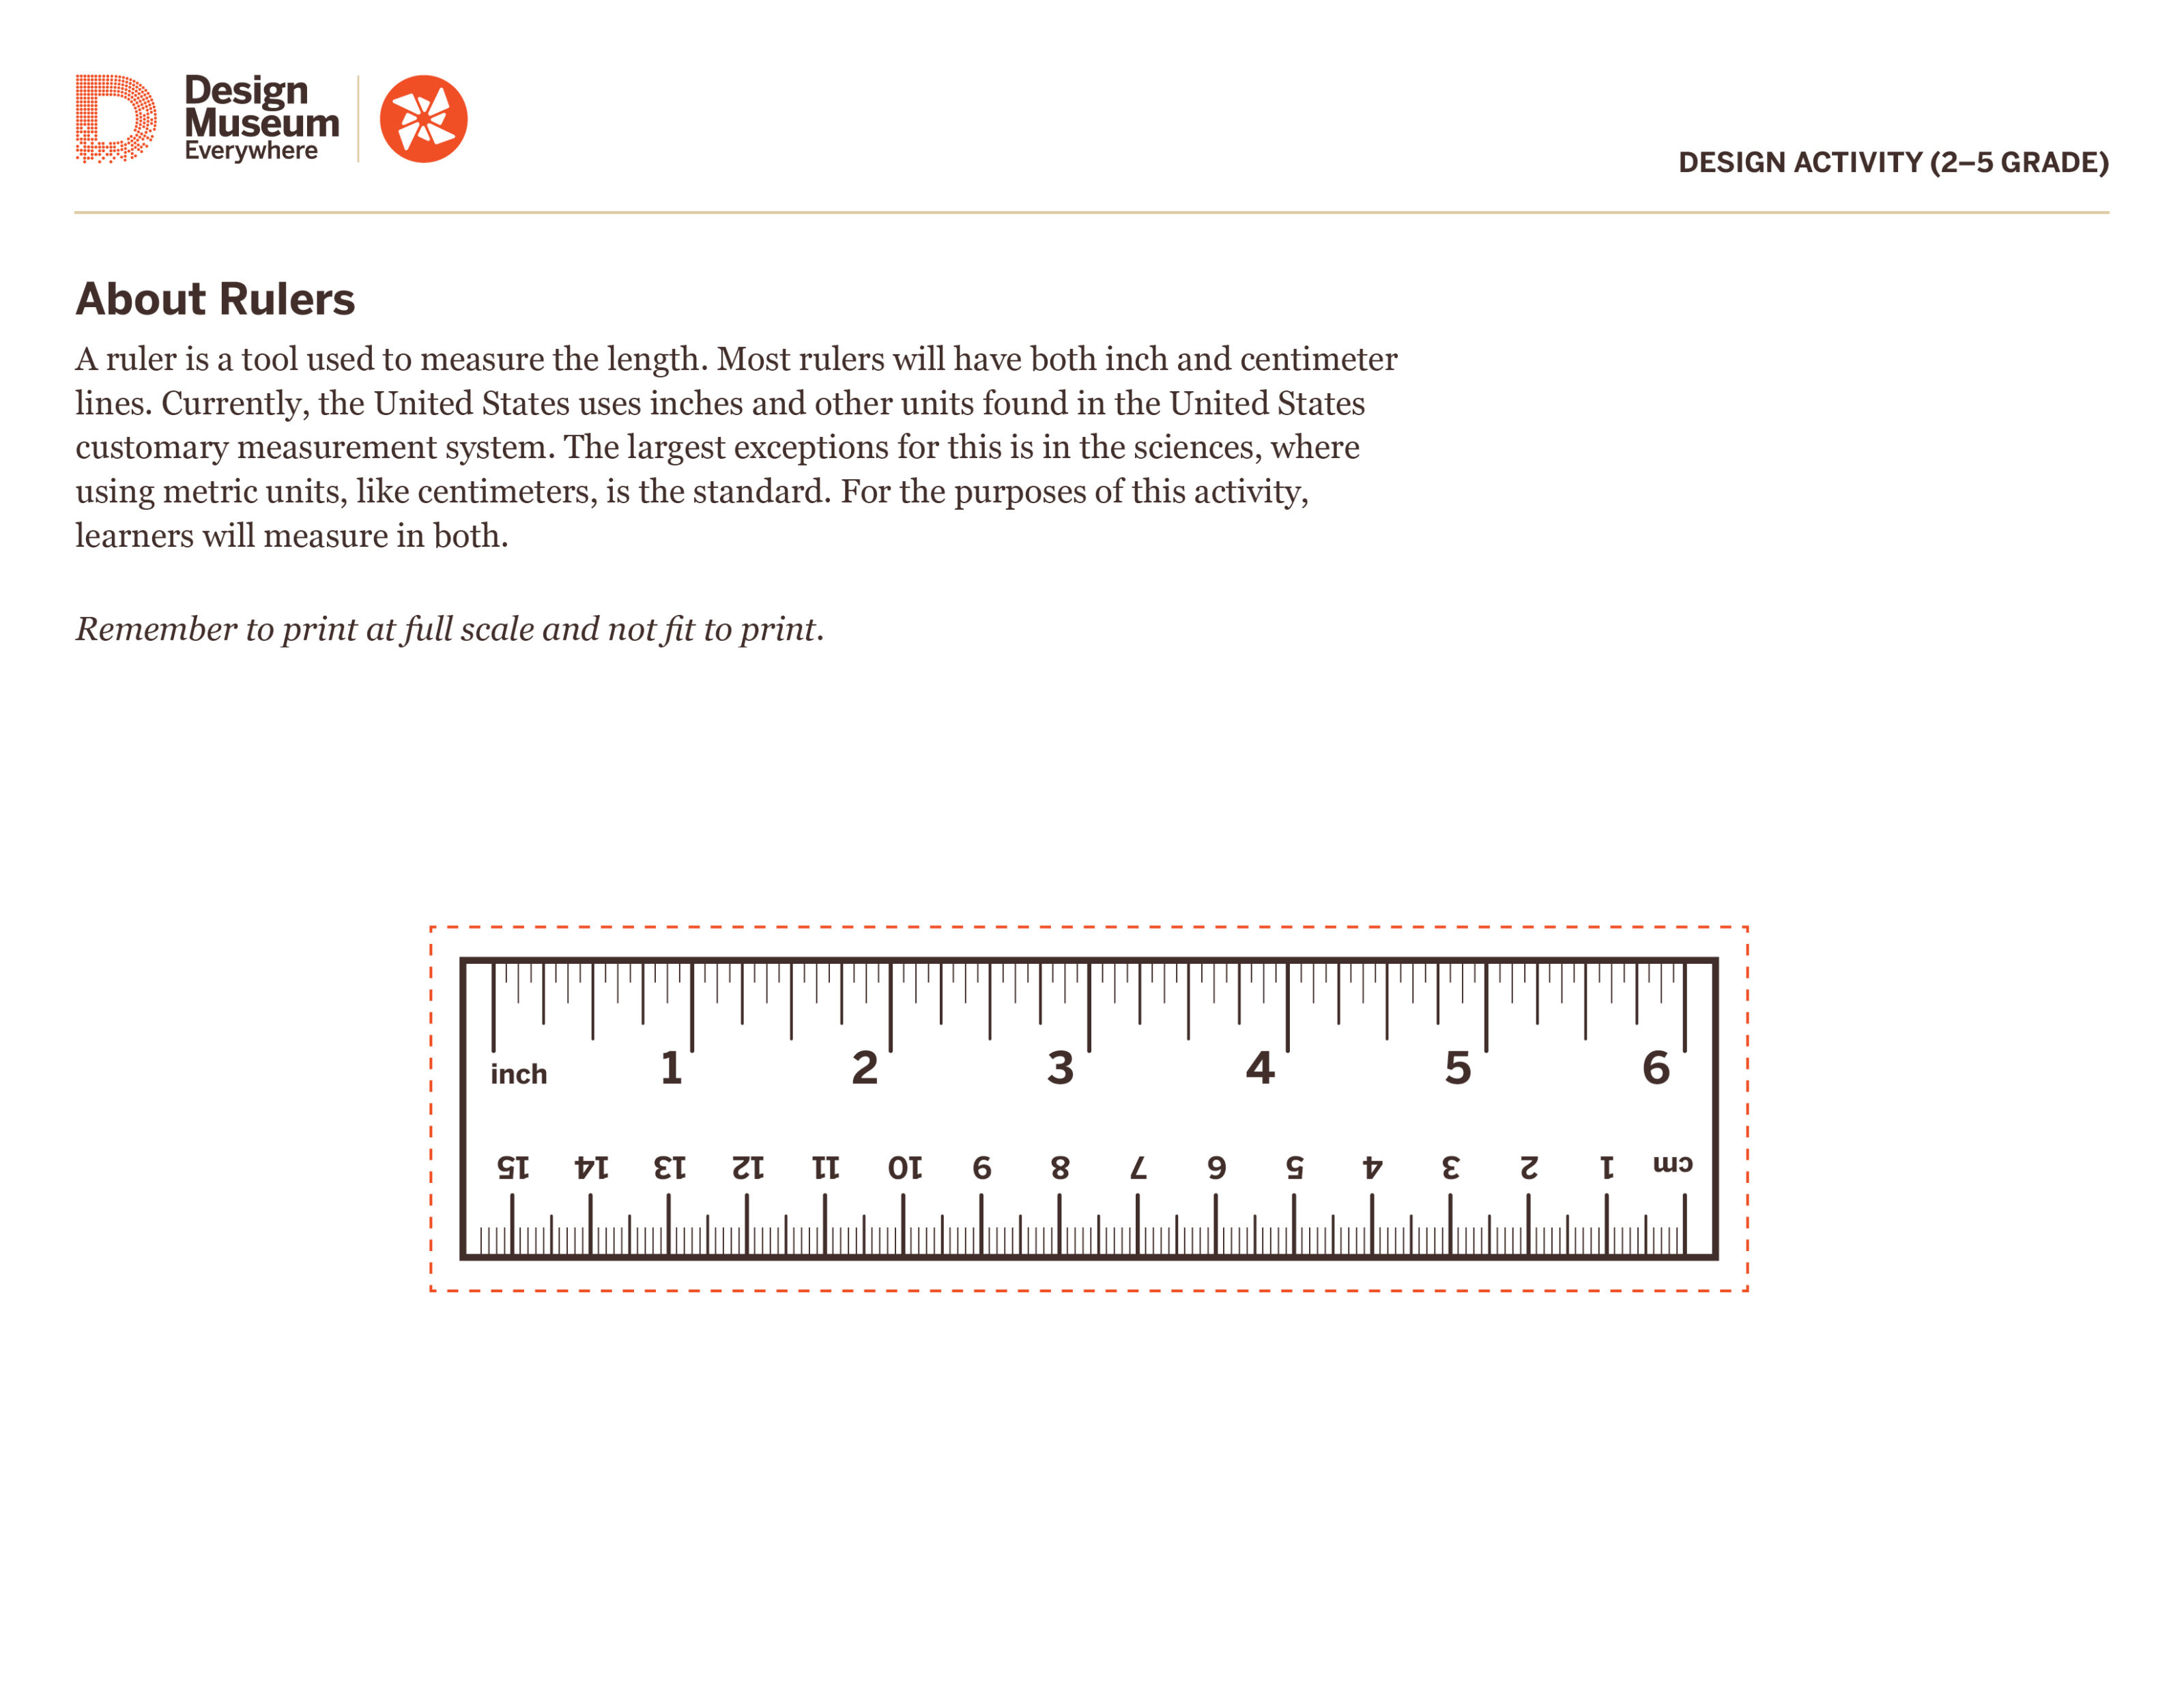 6 inch ruler measurements